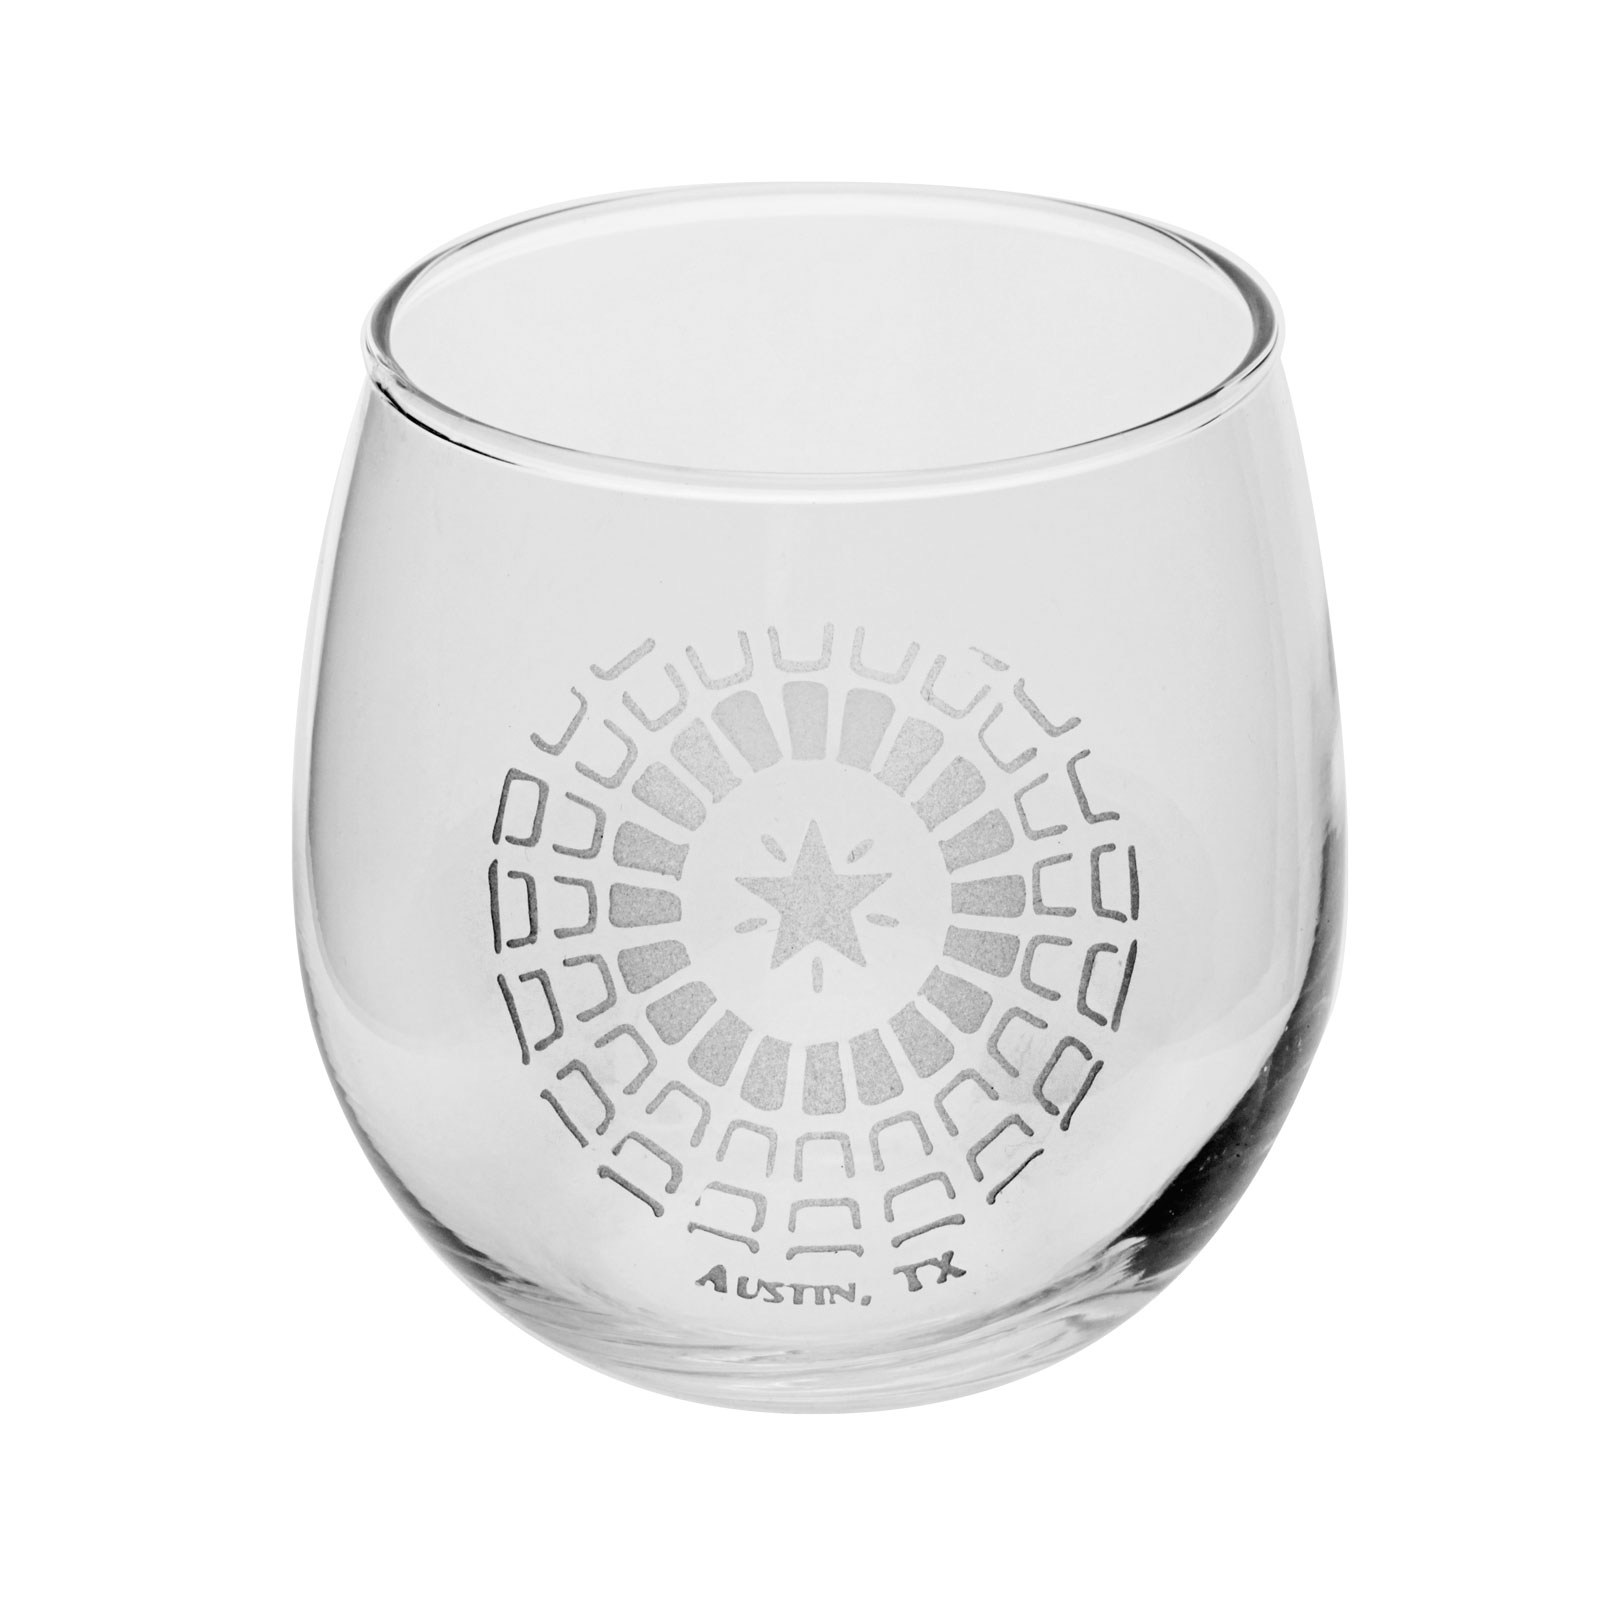 Ethos 8oz Custom Etched Stemless Wine Glass 762997-C-2